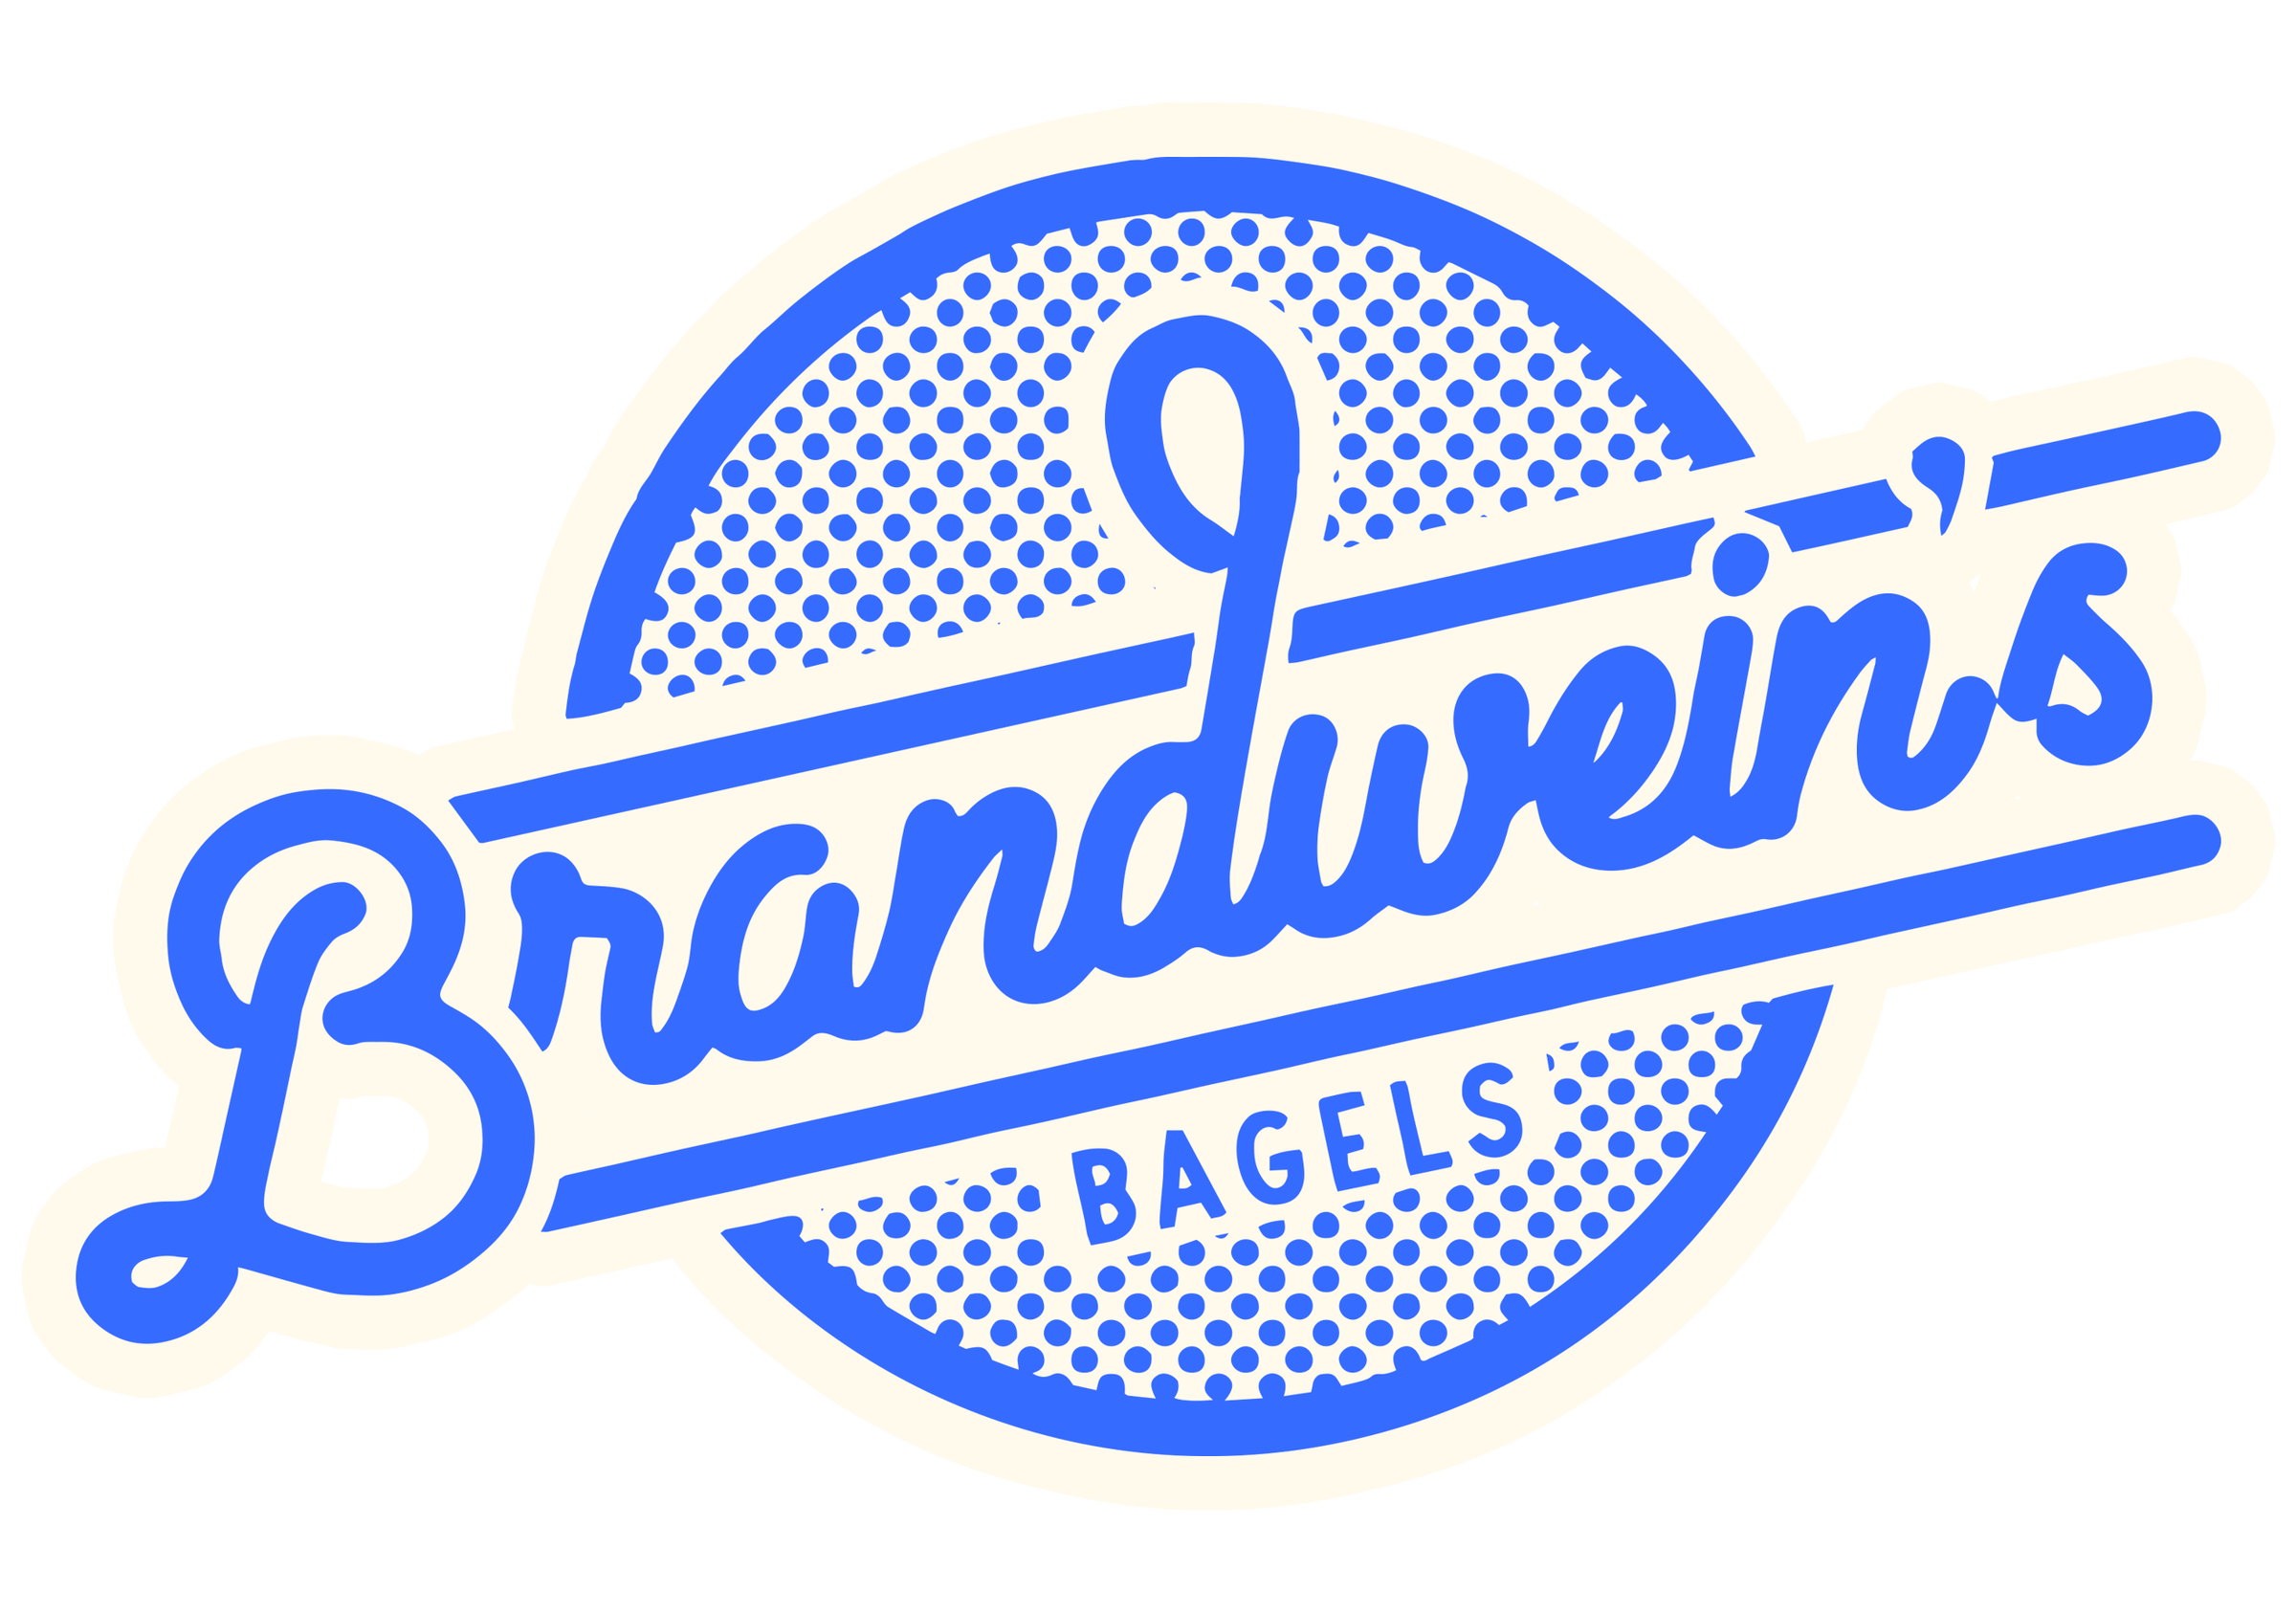 BrandweinsBagels Logo BentoBox (5.6.2020)_1591346895.png